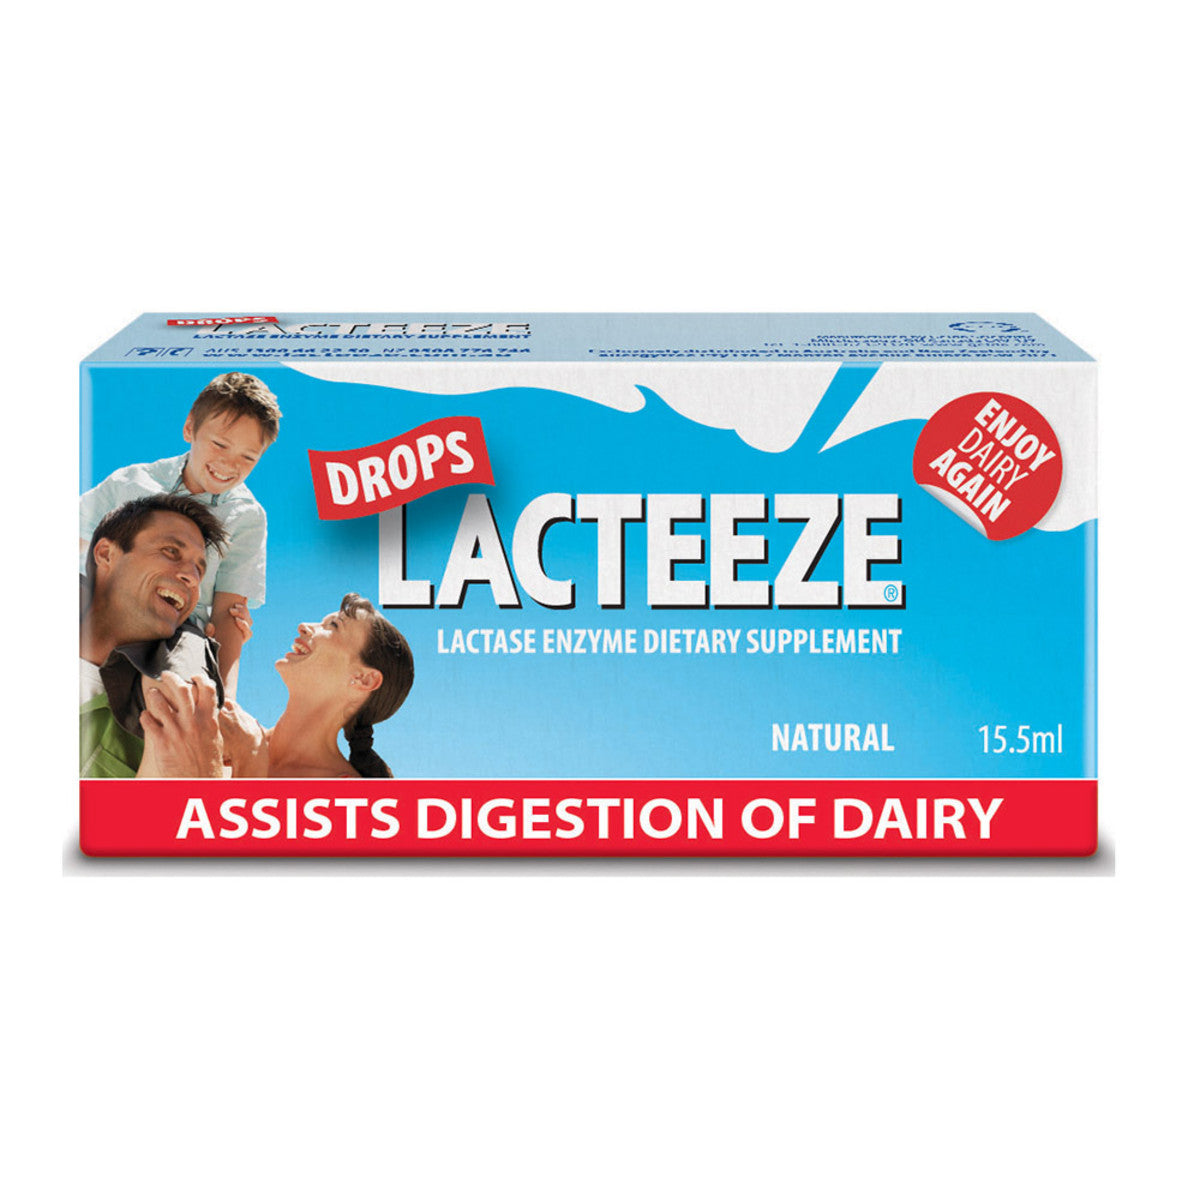 Lacteeze - Drops 15.5ml